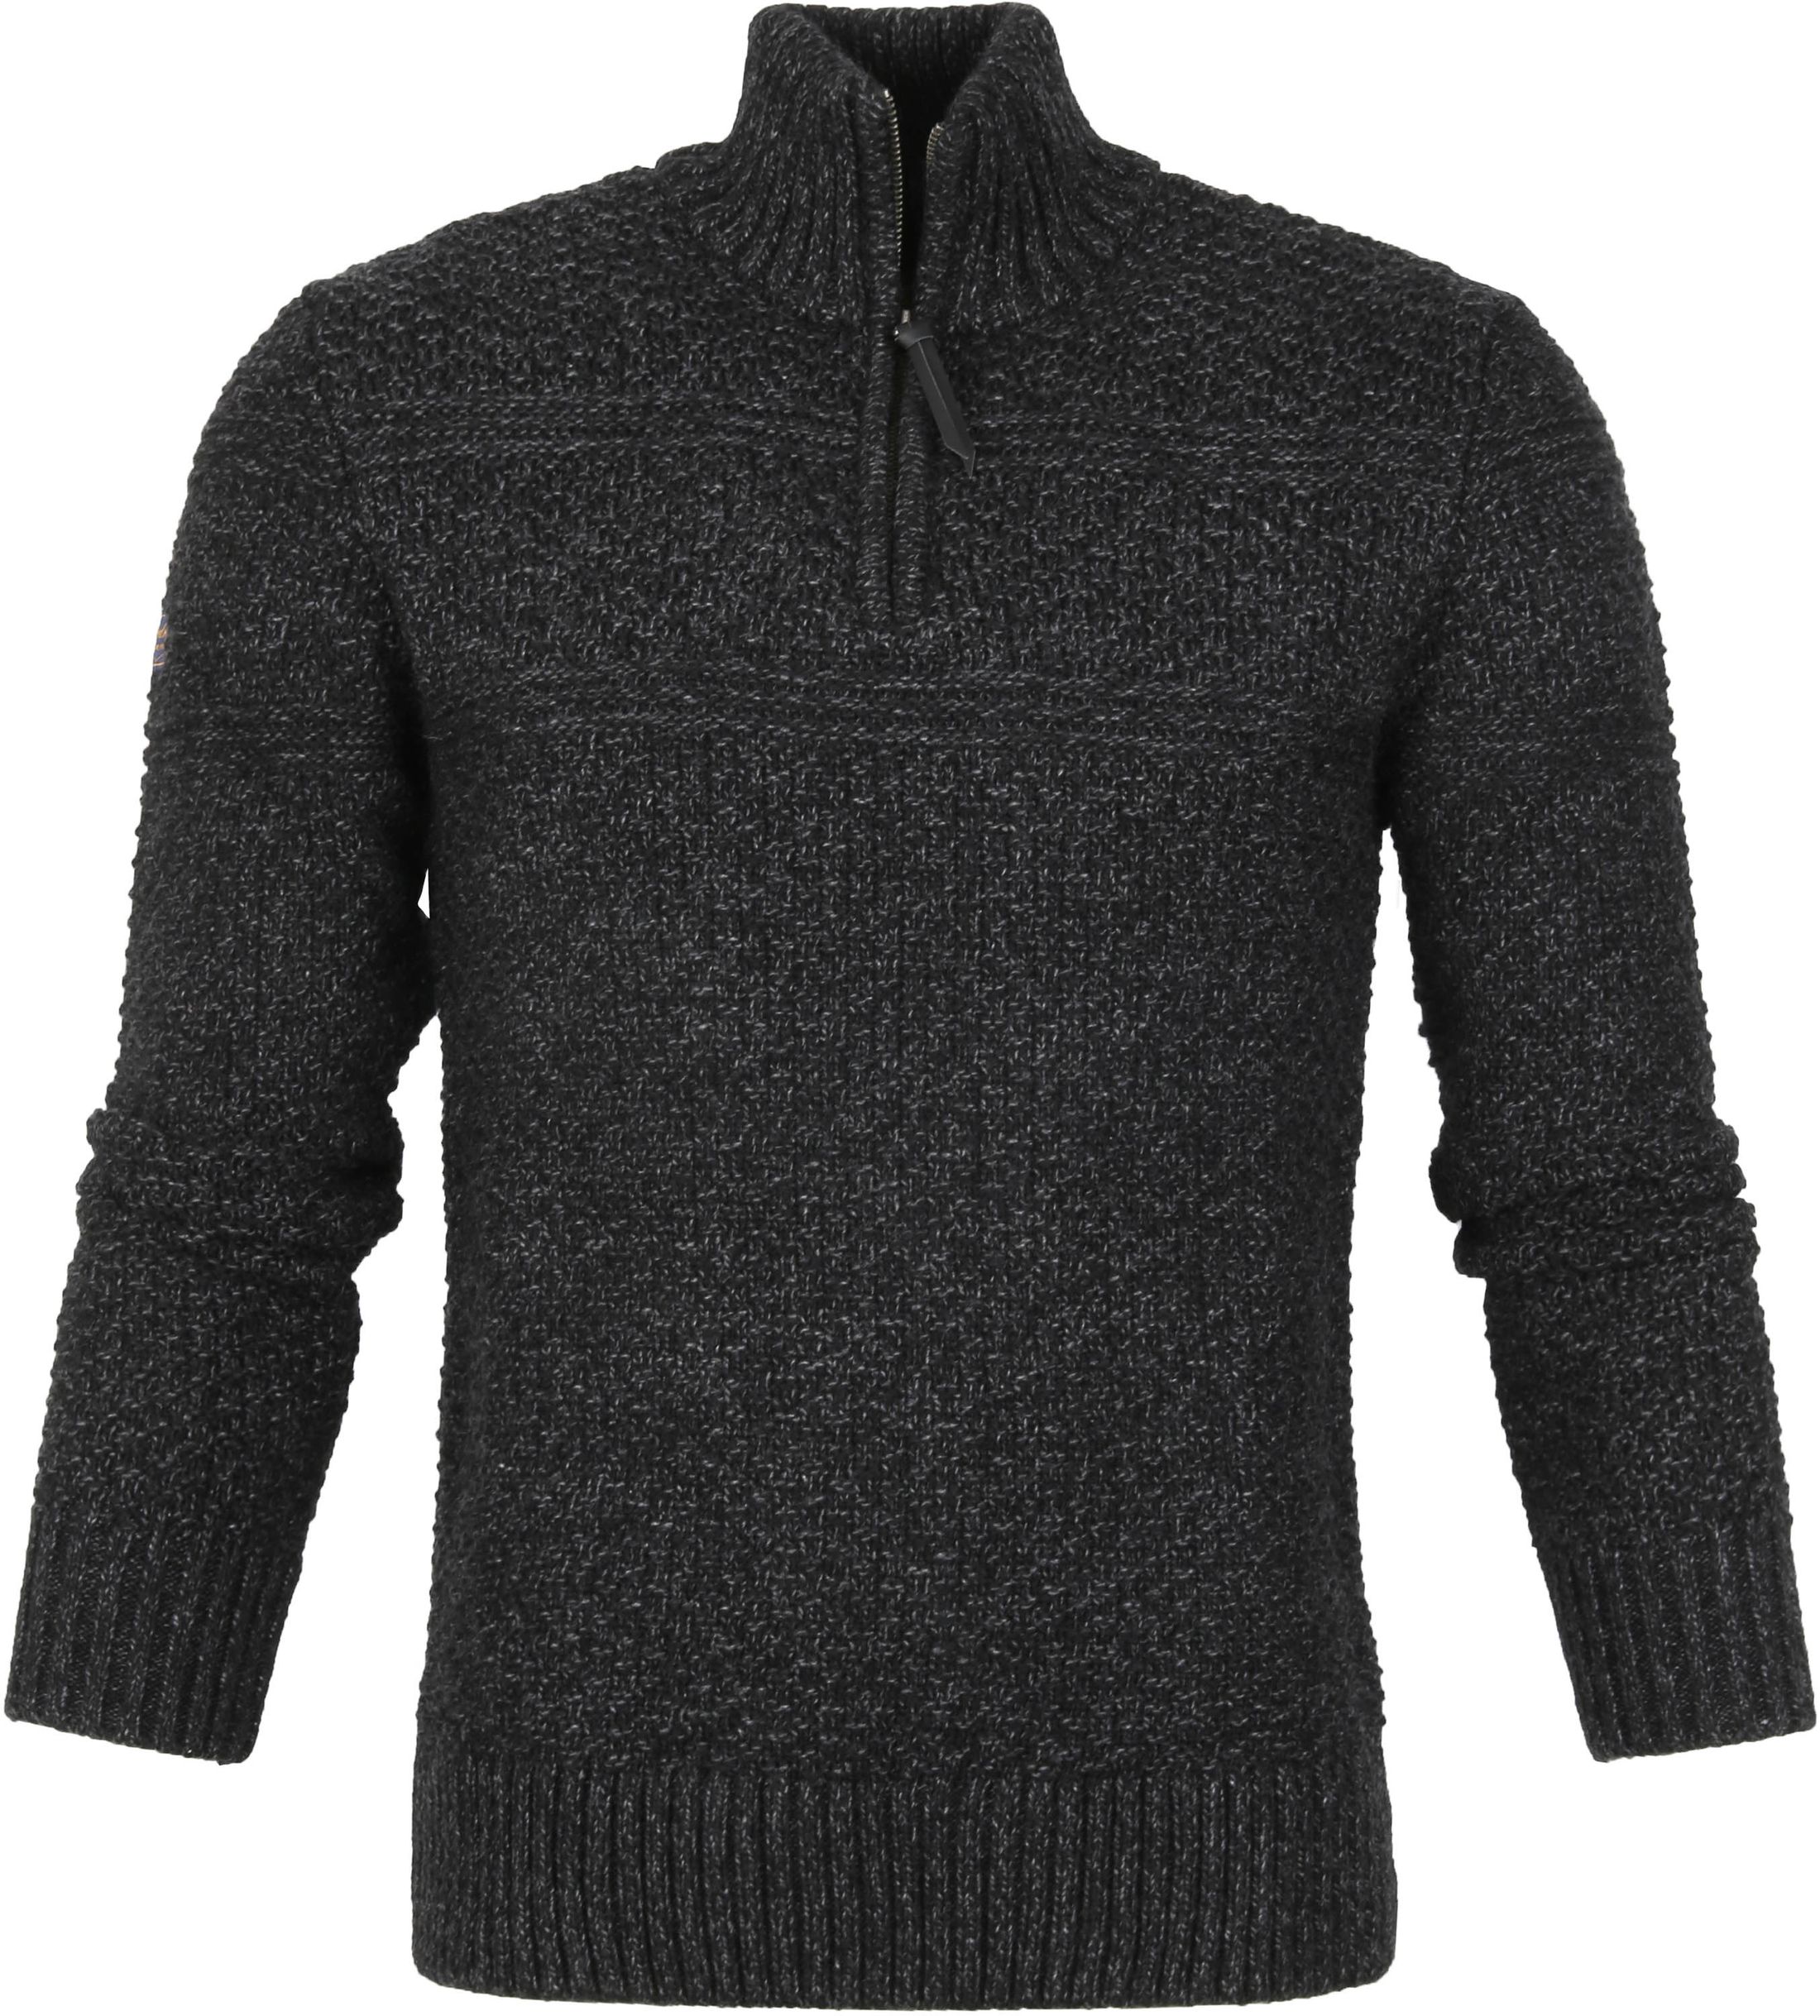 Superdry Jacob Henley Sweater Black size 3XL